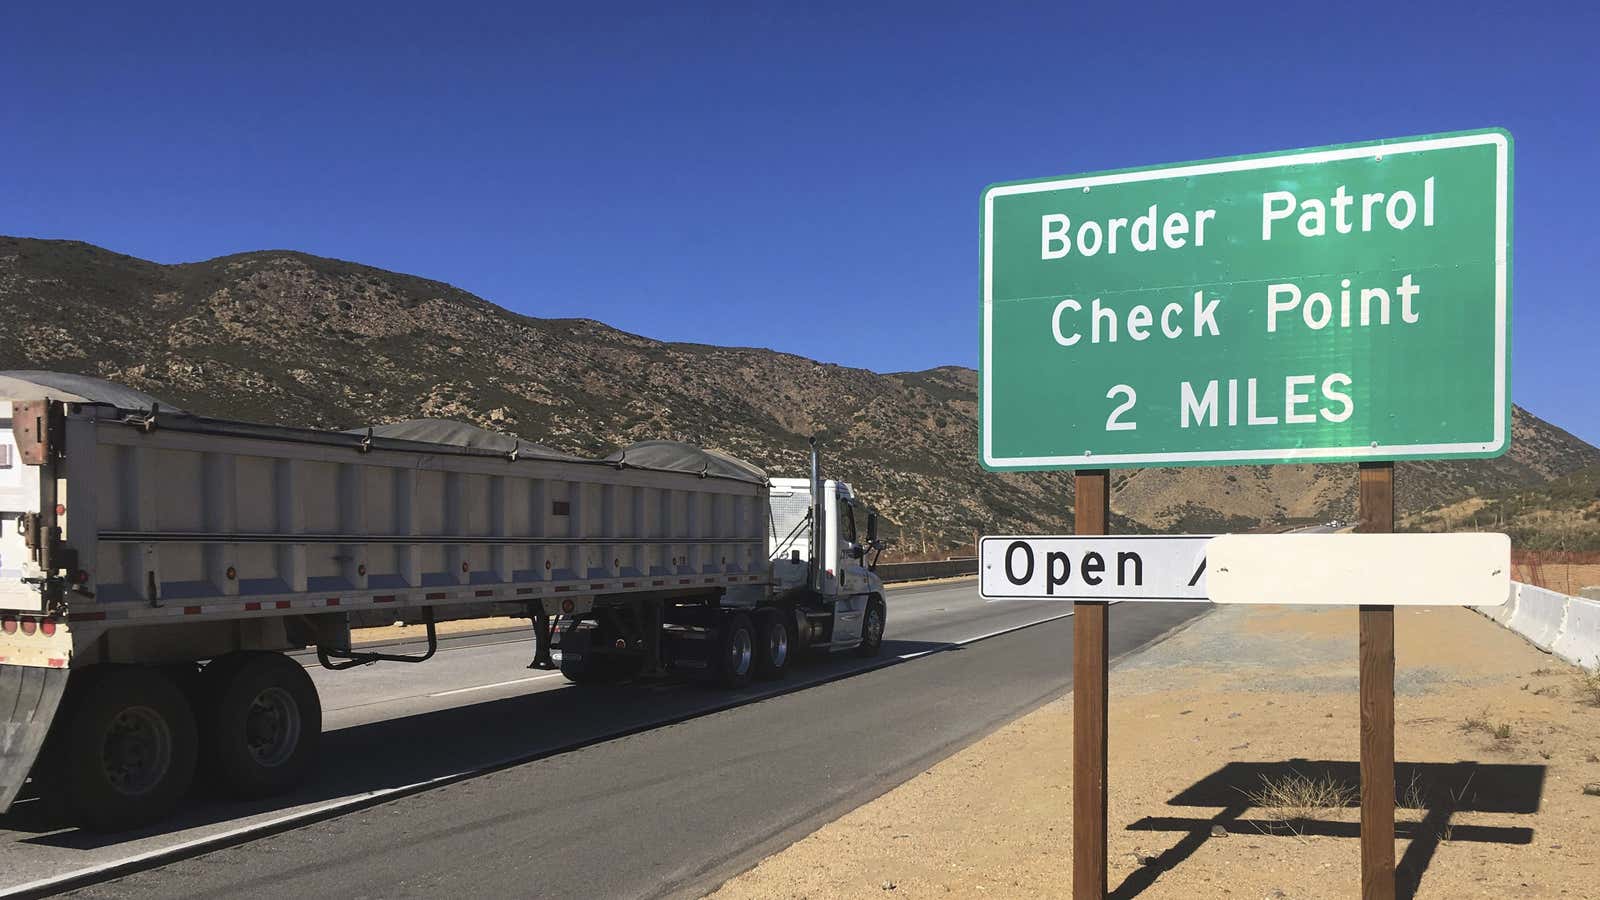 The Border Patrol’s jurisdiction extends 100 miles into the US interior.